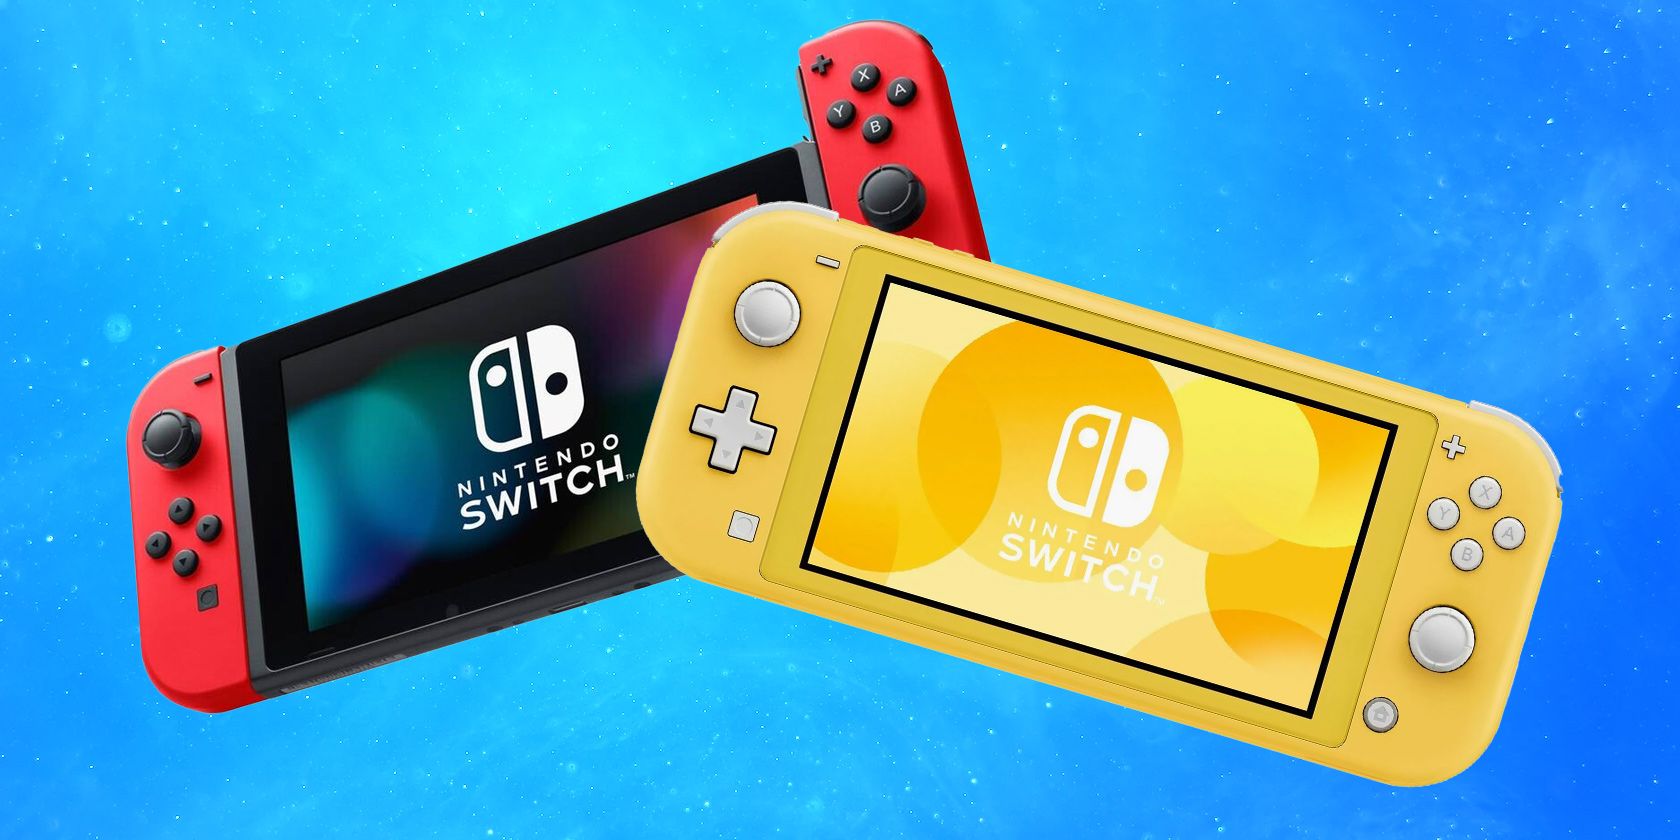 Original Nintendo Switch vs. Switch Lite: Which Should You Buy?